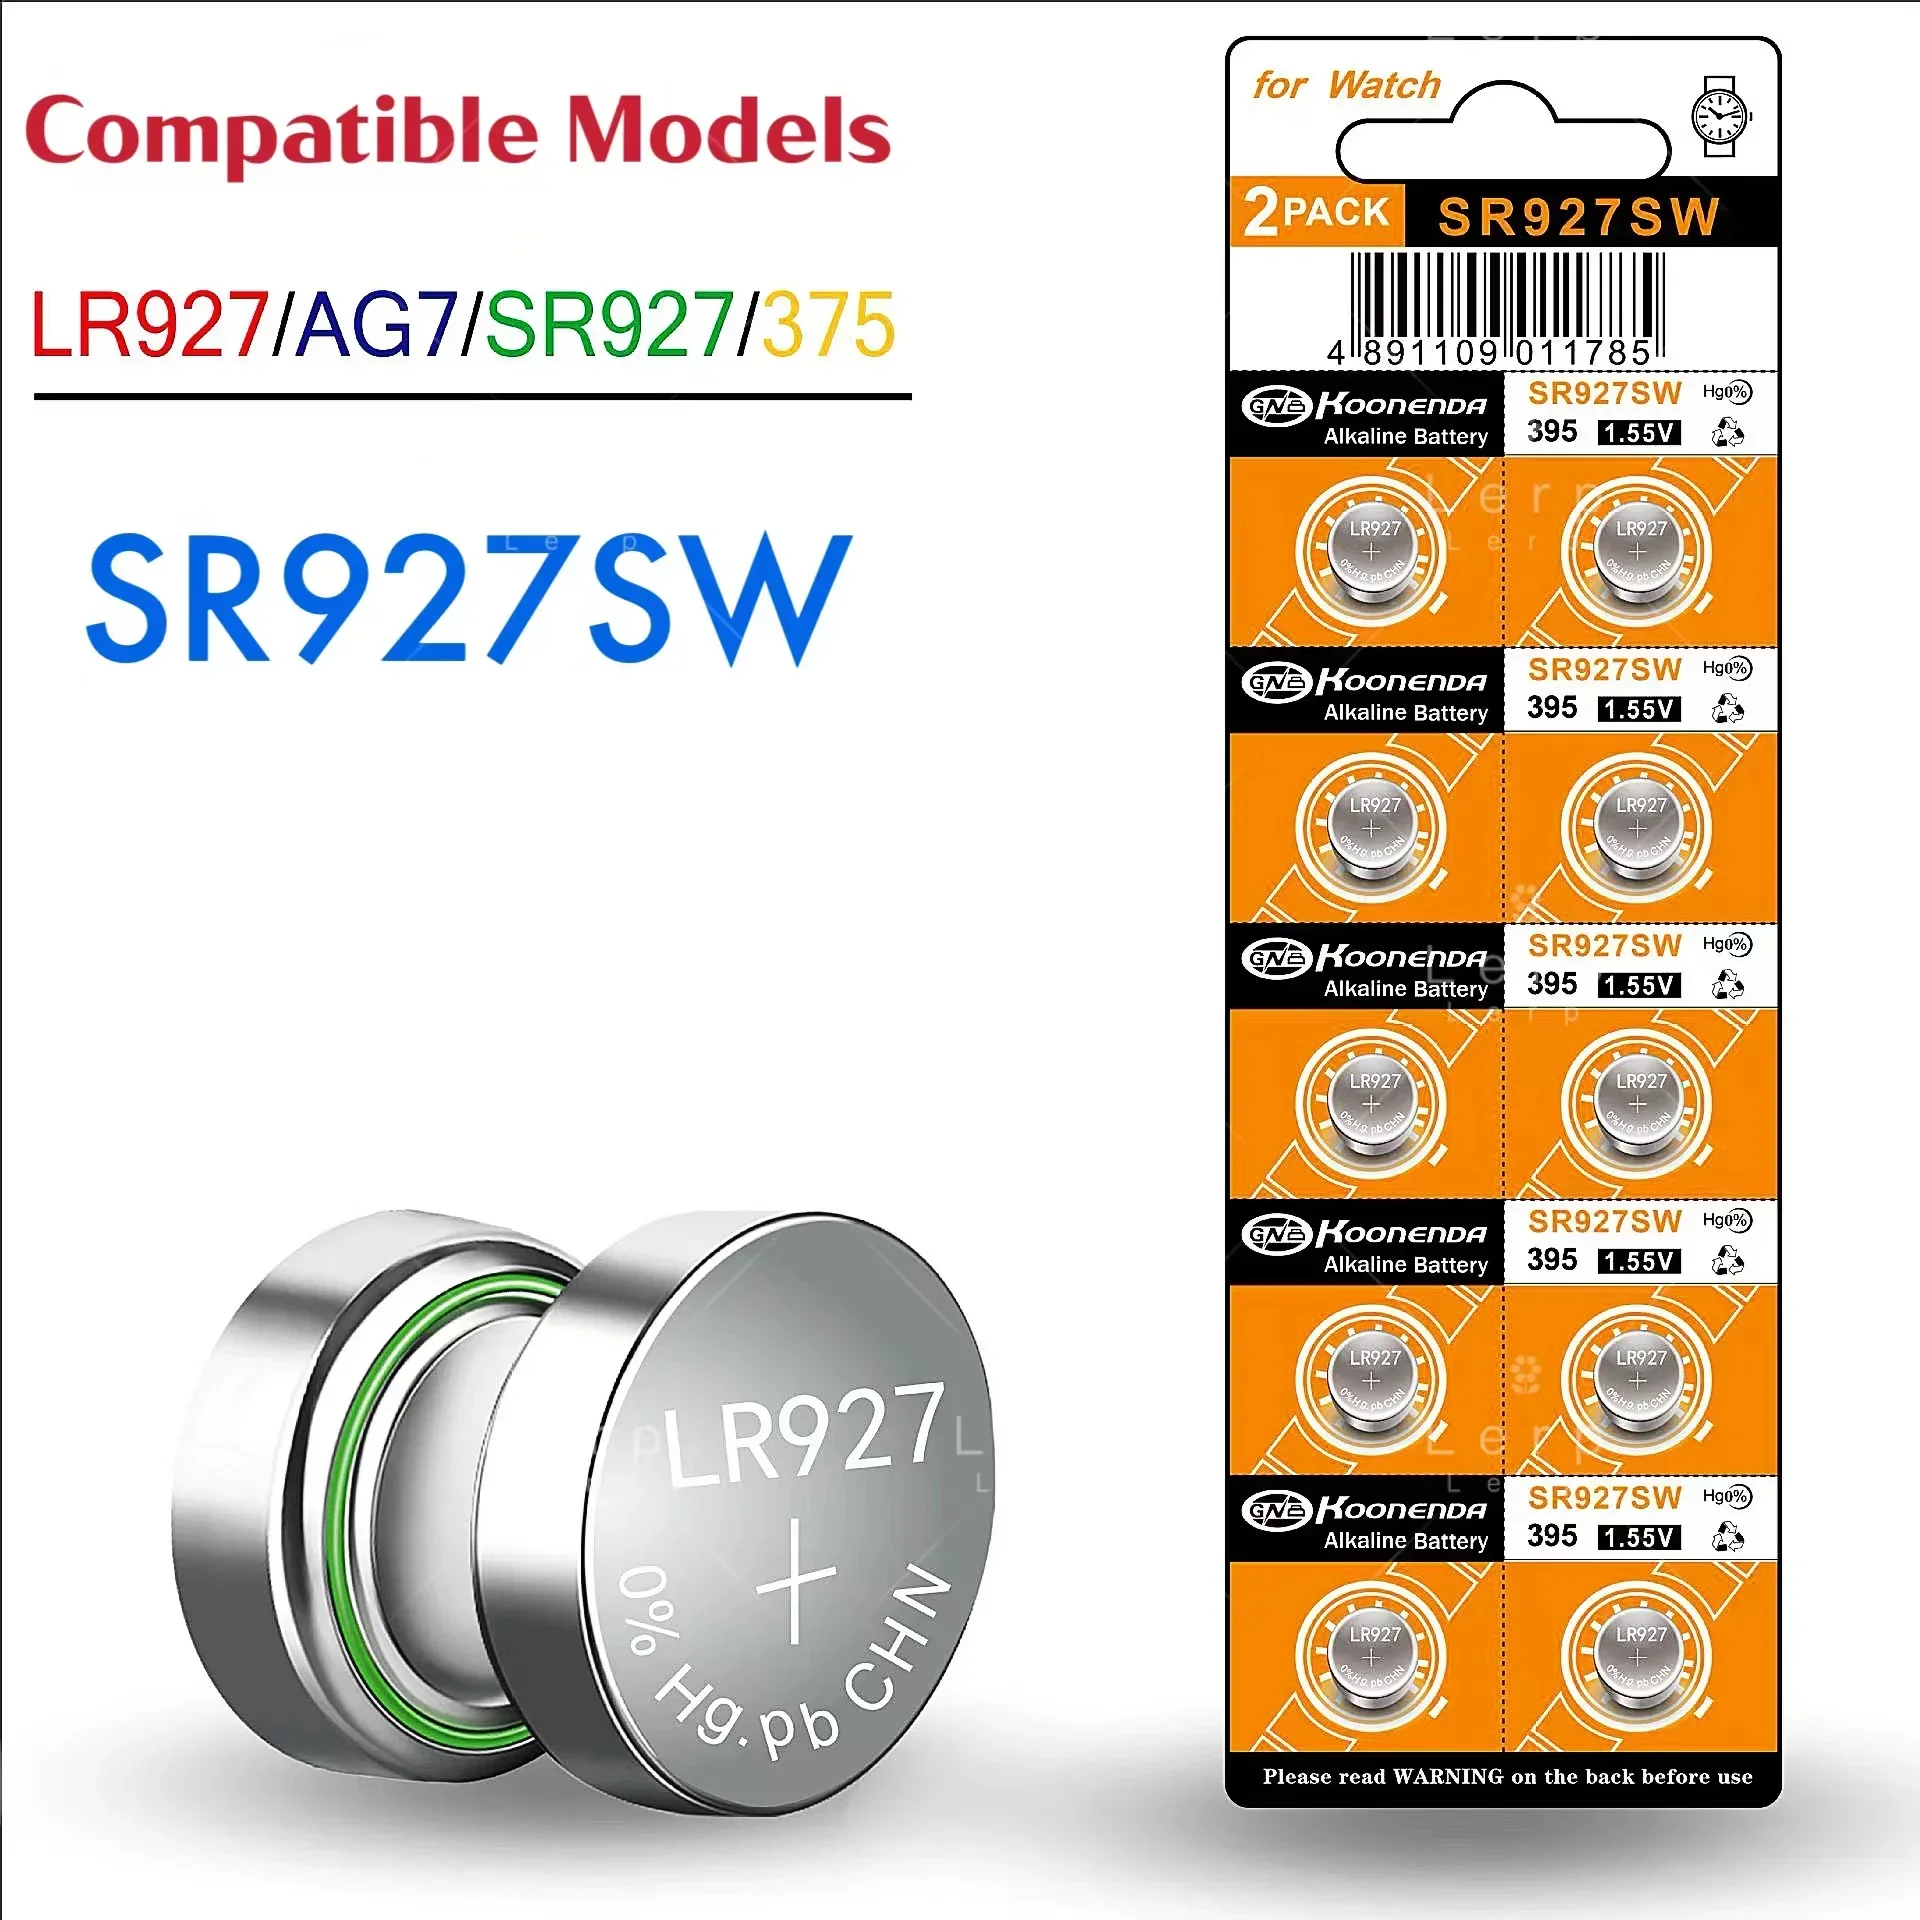 

SR927SW 395 AG7 LR927 399 кнопочный аккумулятор 1,55 в аккумулятор для часов